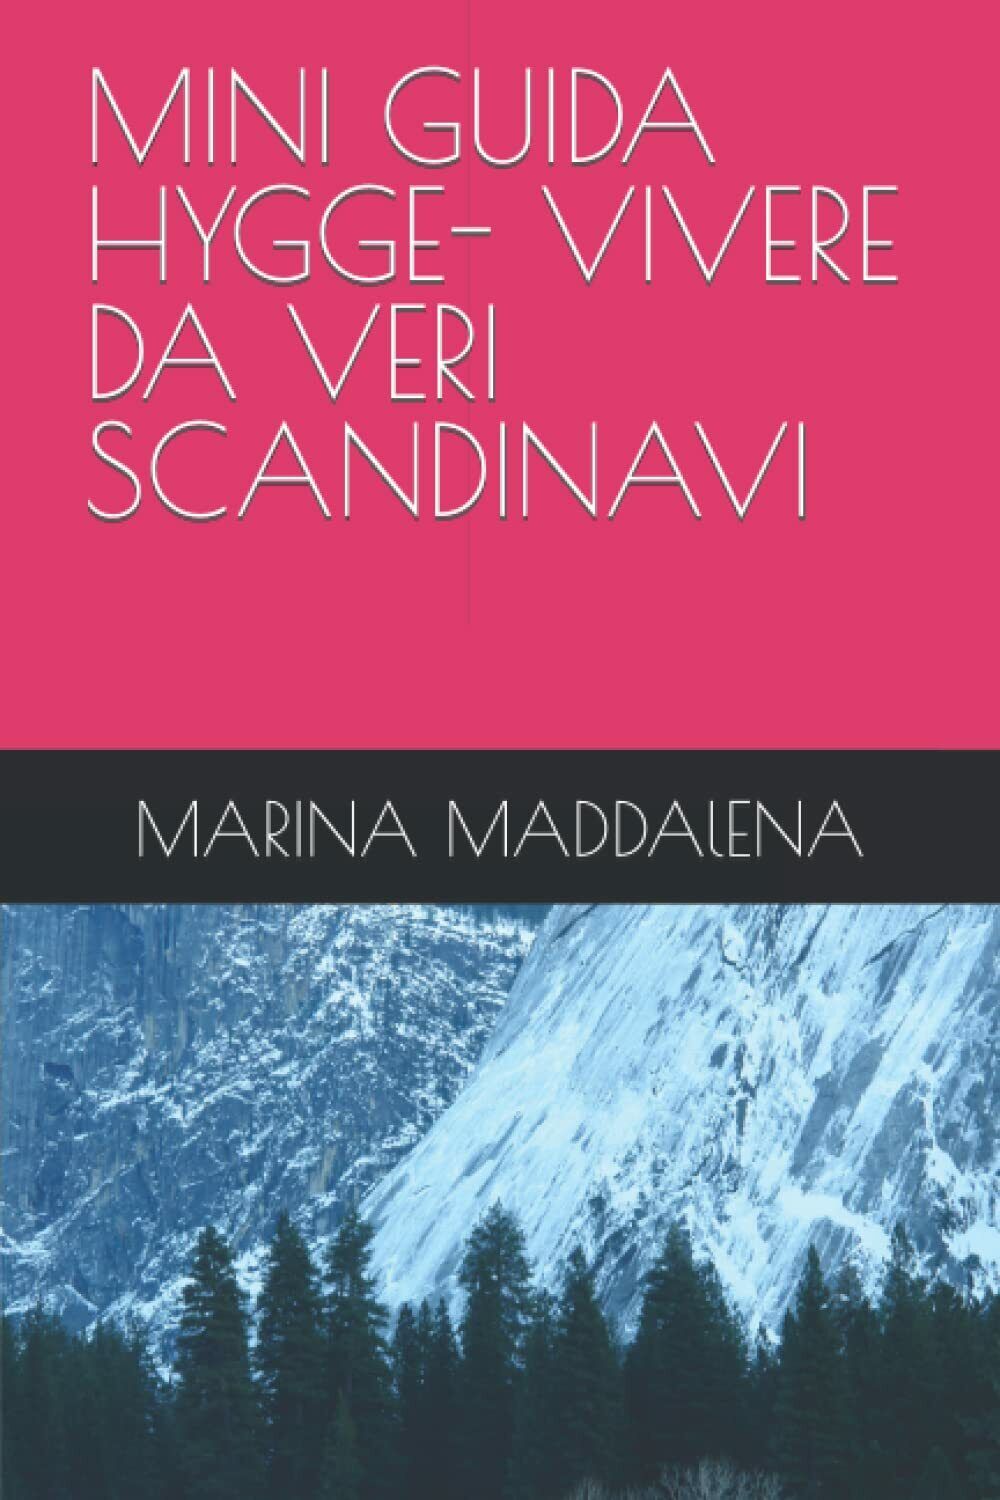 MINI GUIDA HYGGE- VIVERE DA VERI SCANDINAVI di Marina Maddalena,  2021,  Indipen